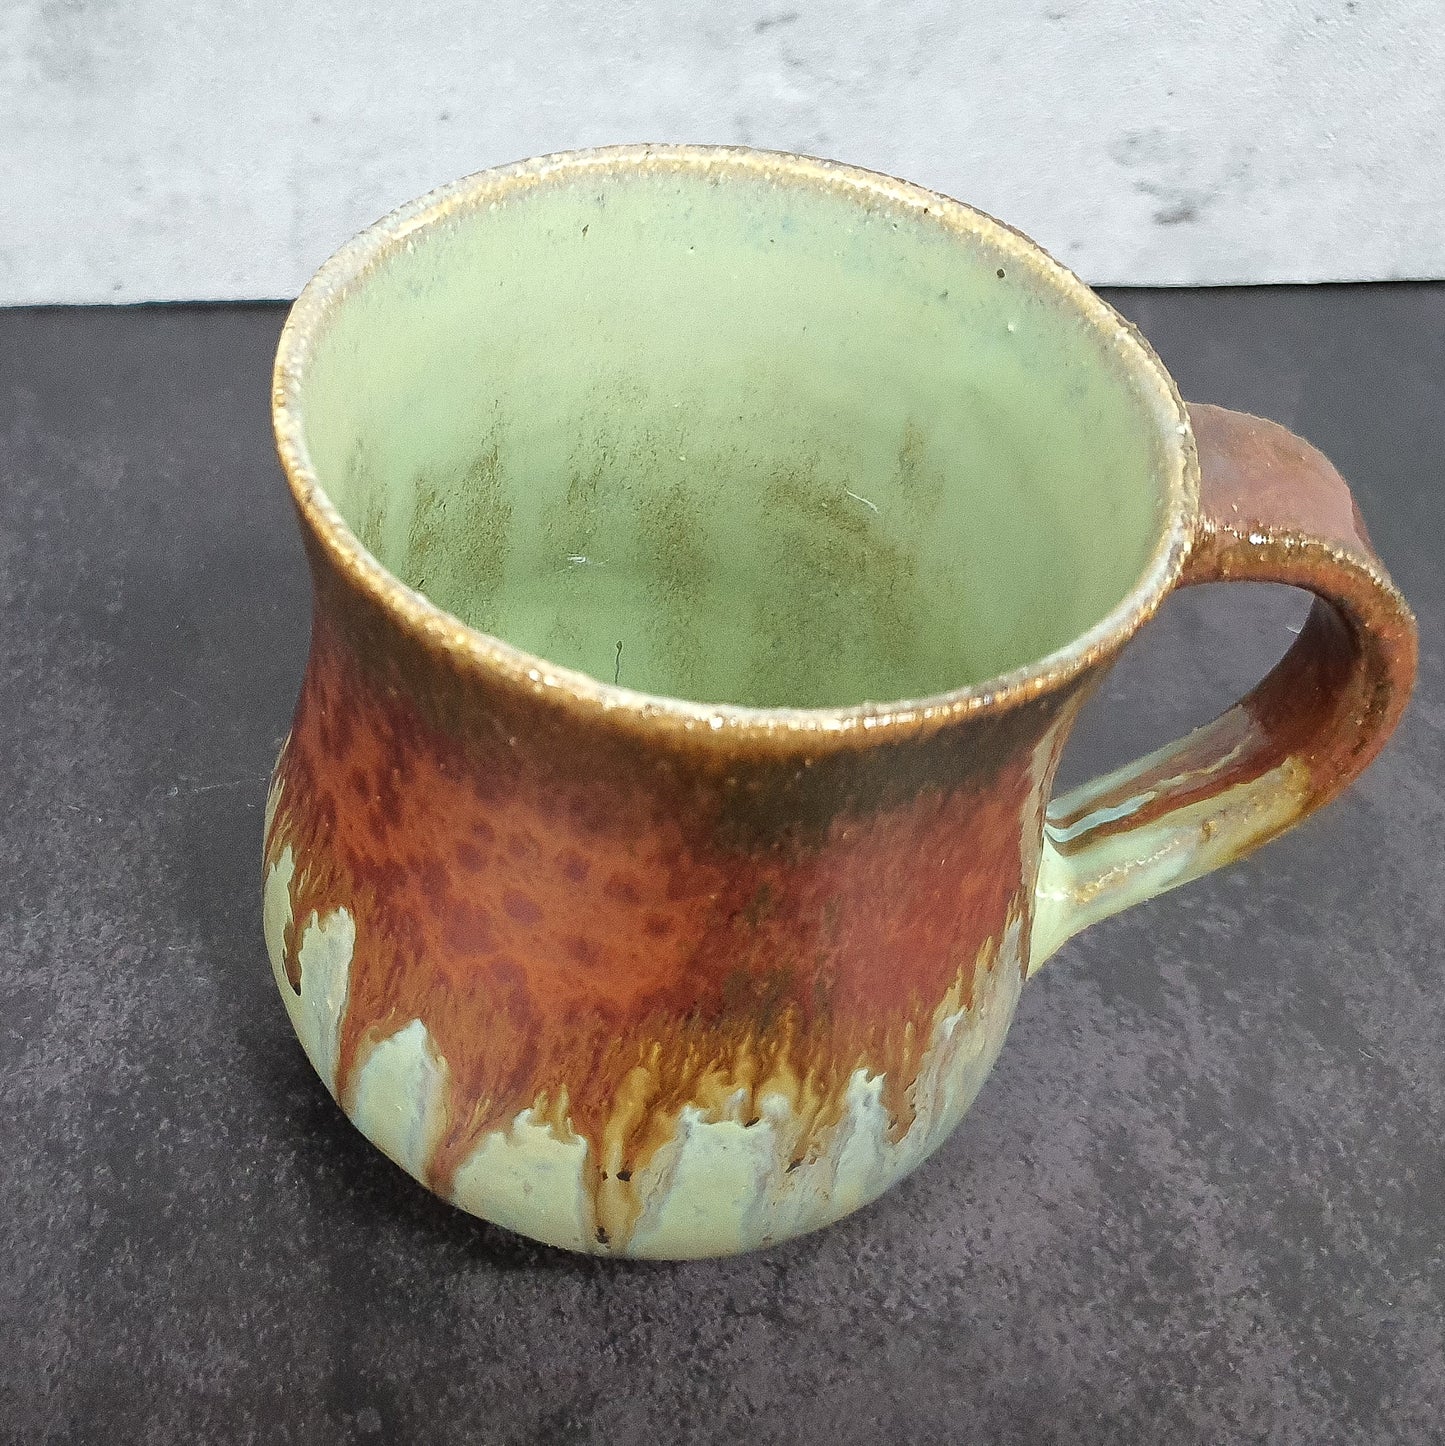 Turquoise Copper Drips Mug